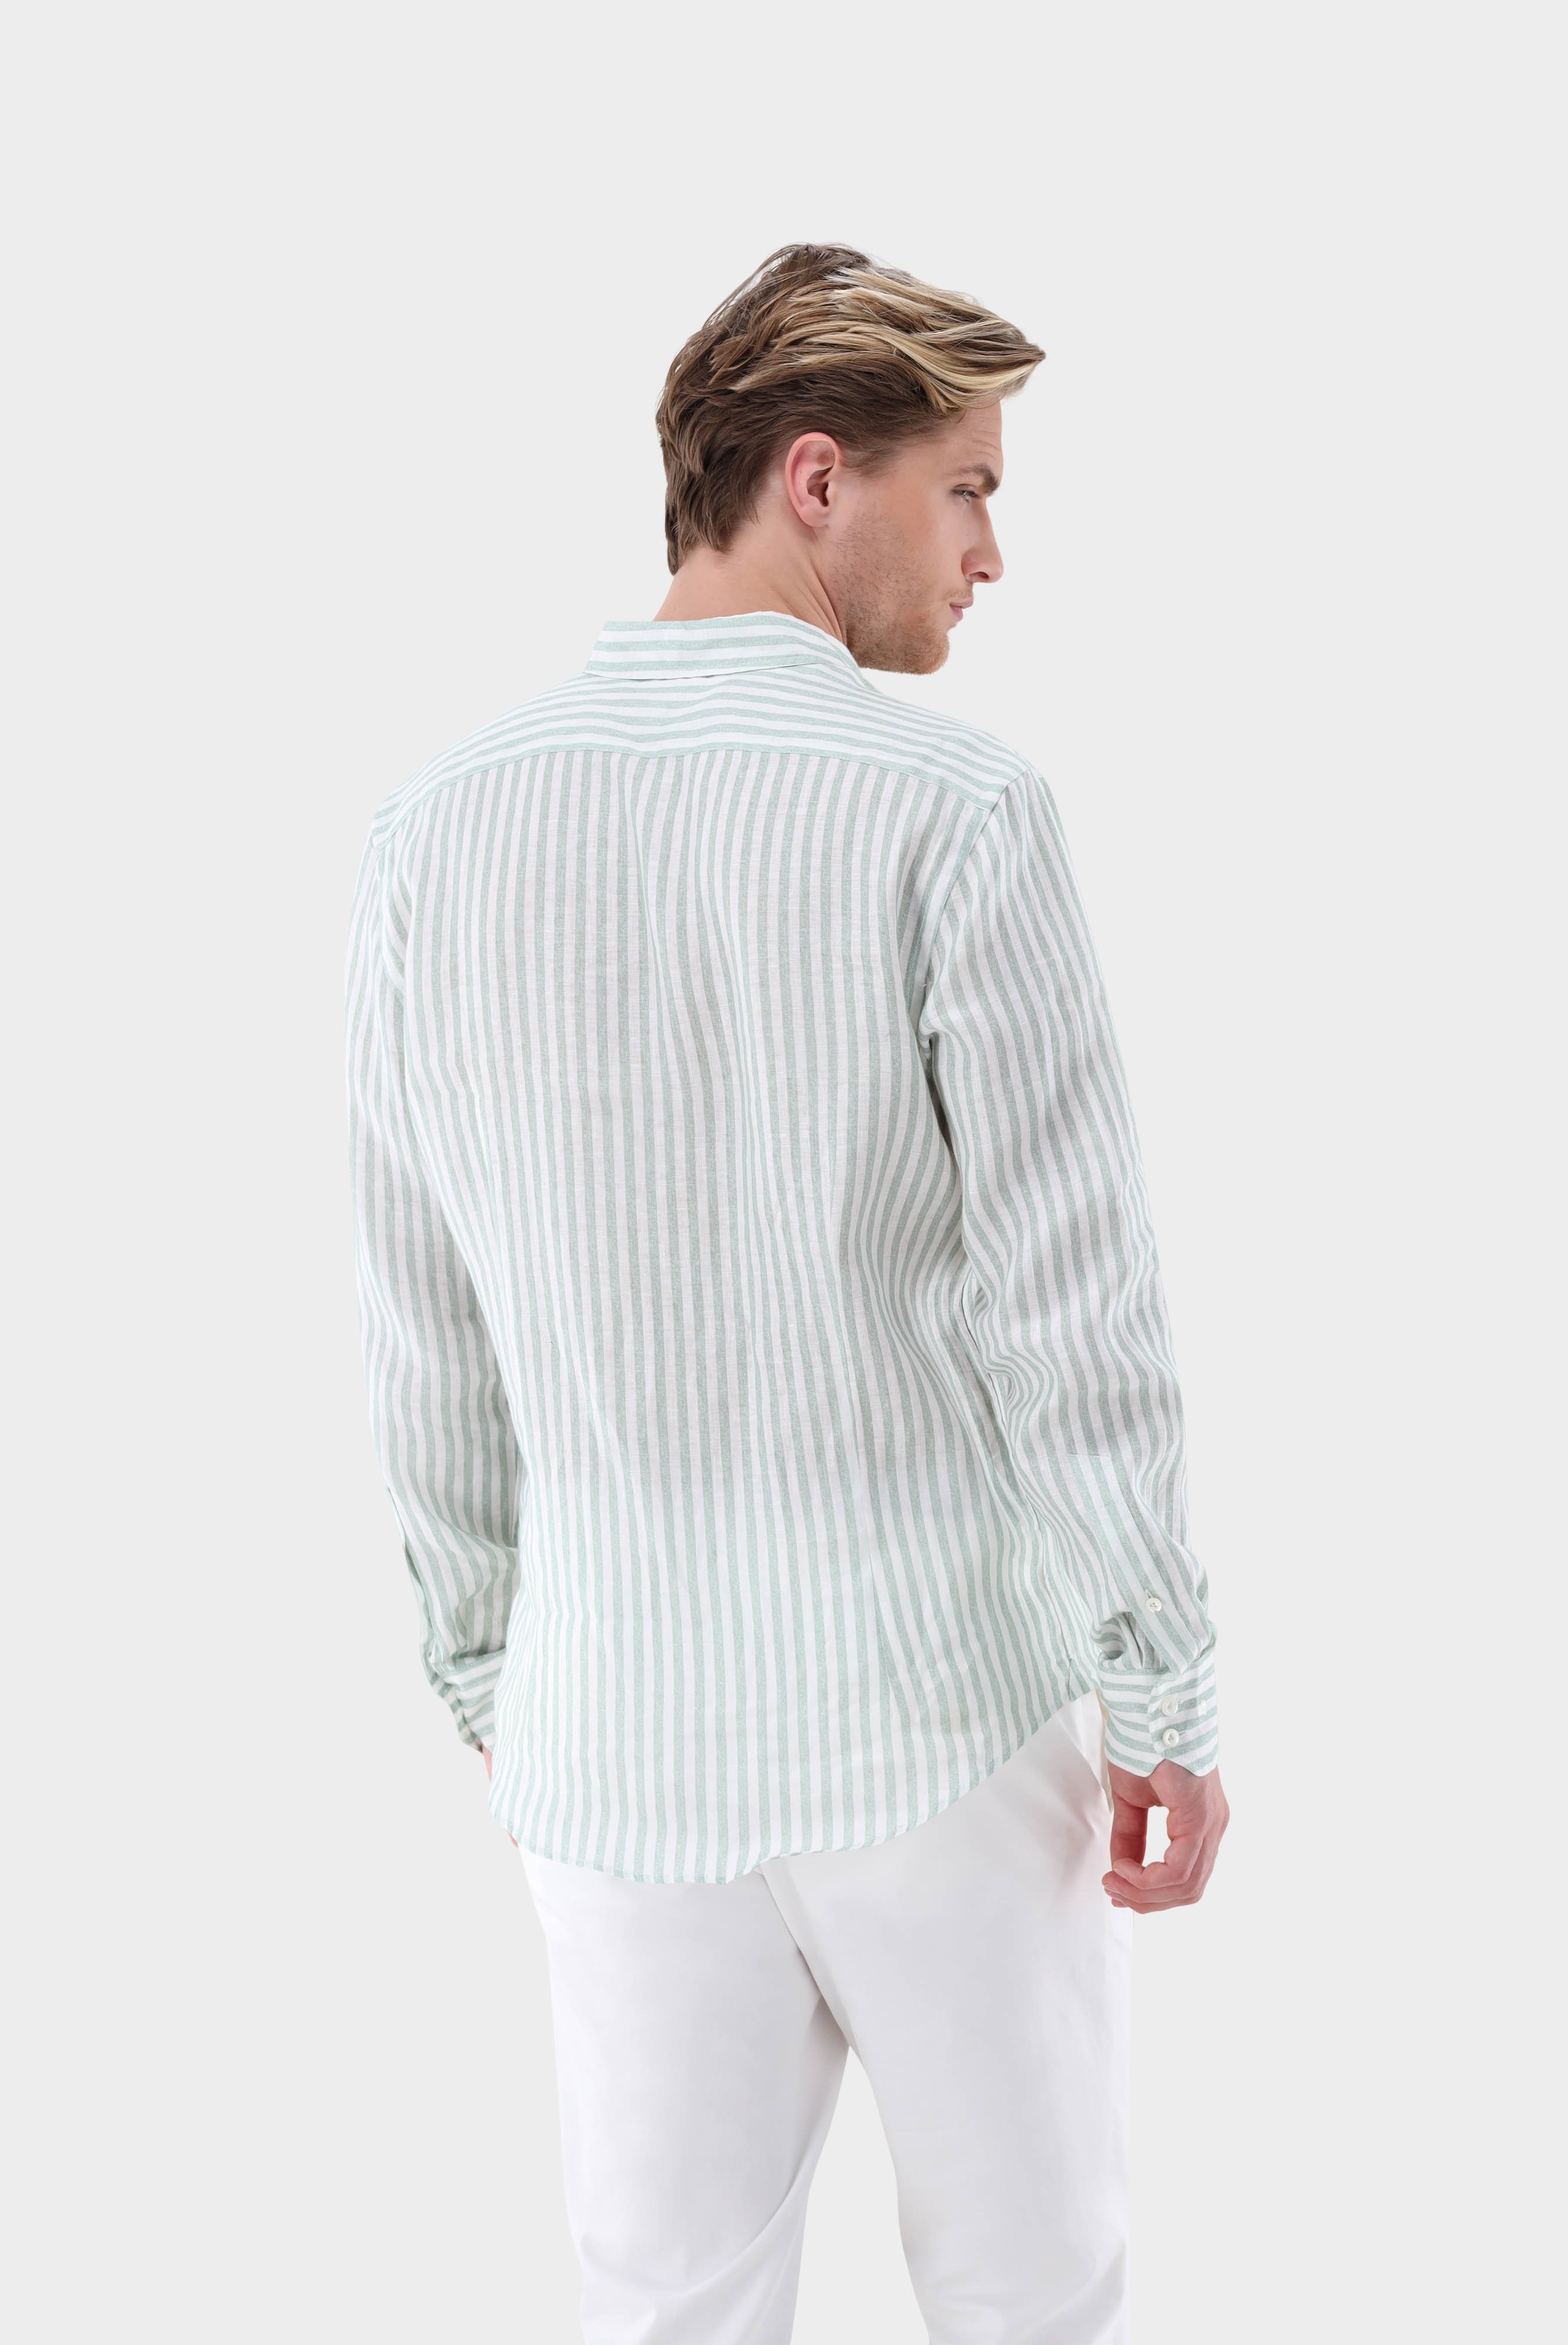 Casual Shirts+Linen Stripe Print Shirt Tailor Fit+20.2013.9V.170352.940.40